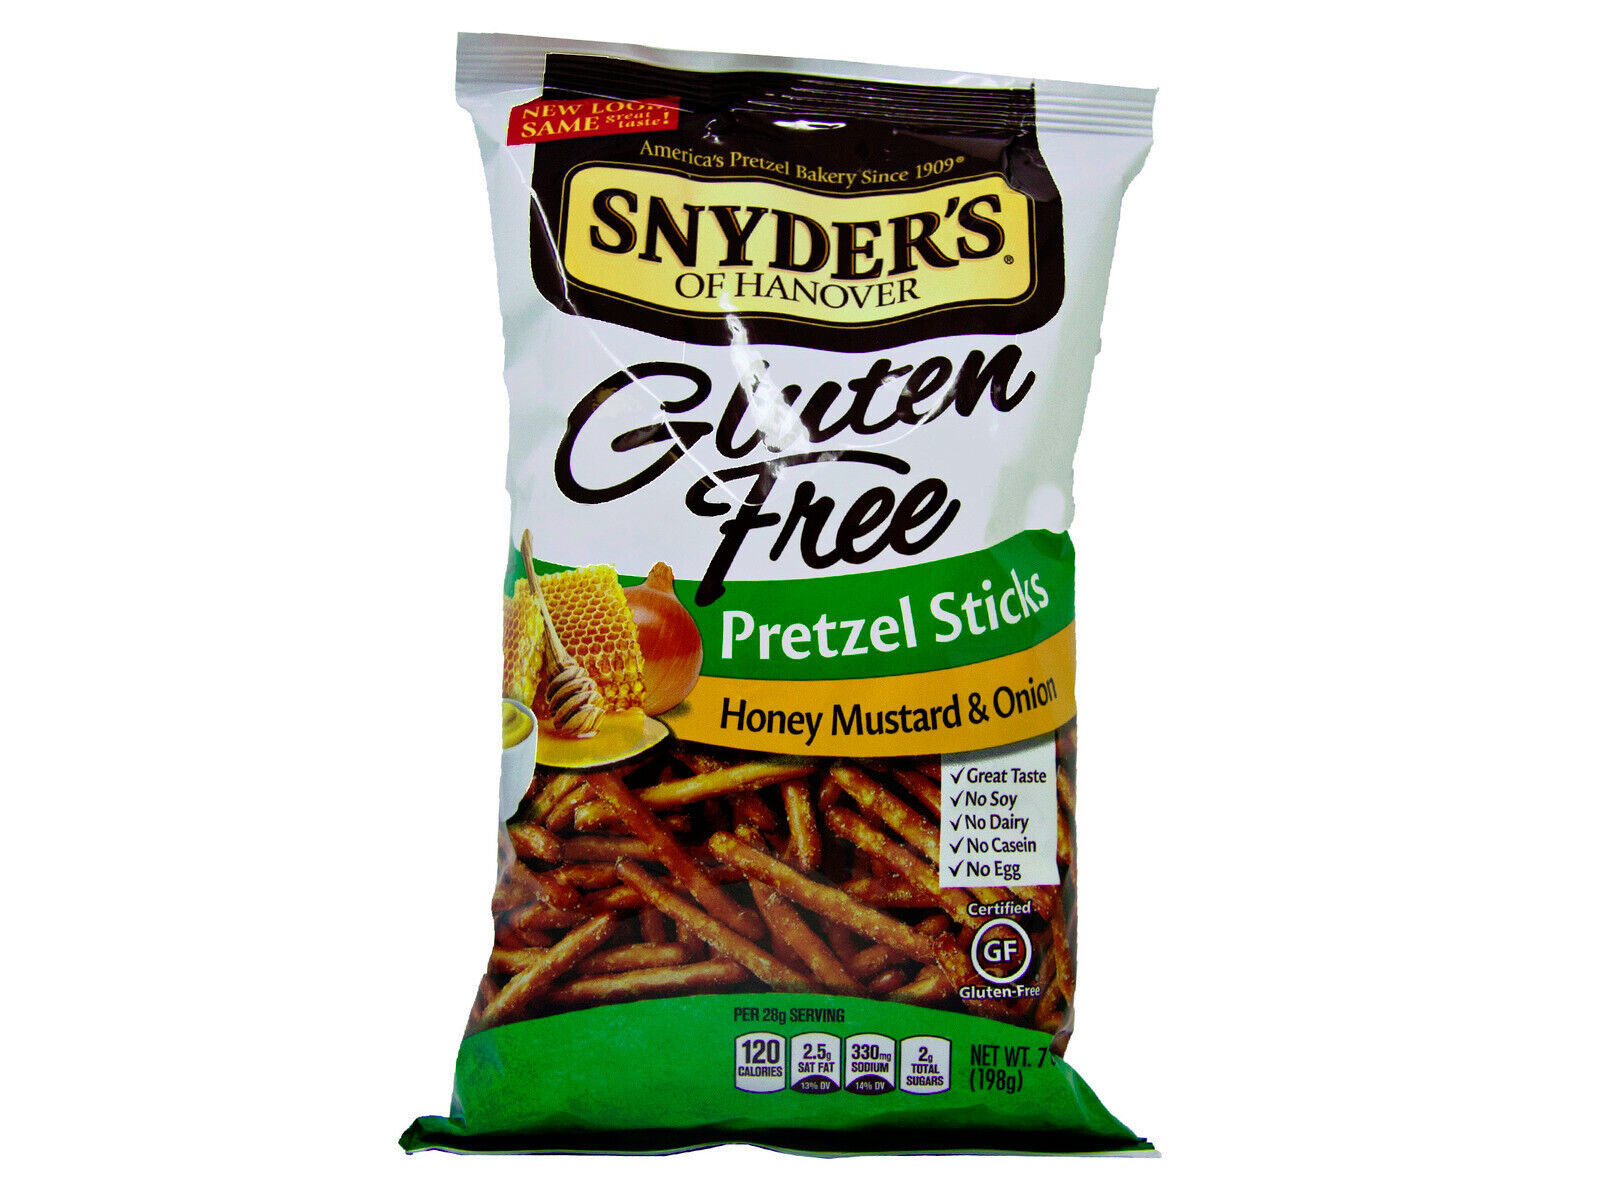 Primary image for Snyder's of Hanover Gluten Free Honey Mustard & Onion Pretzel Sticks, 4-PK 7 oz.